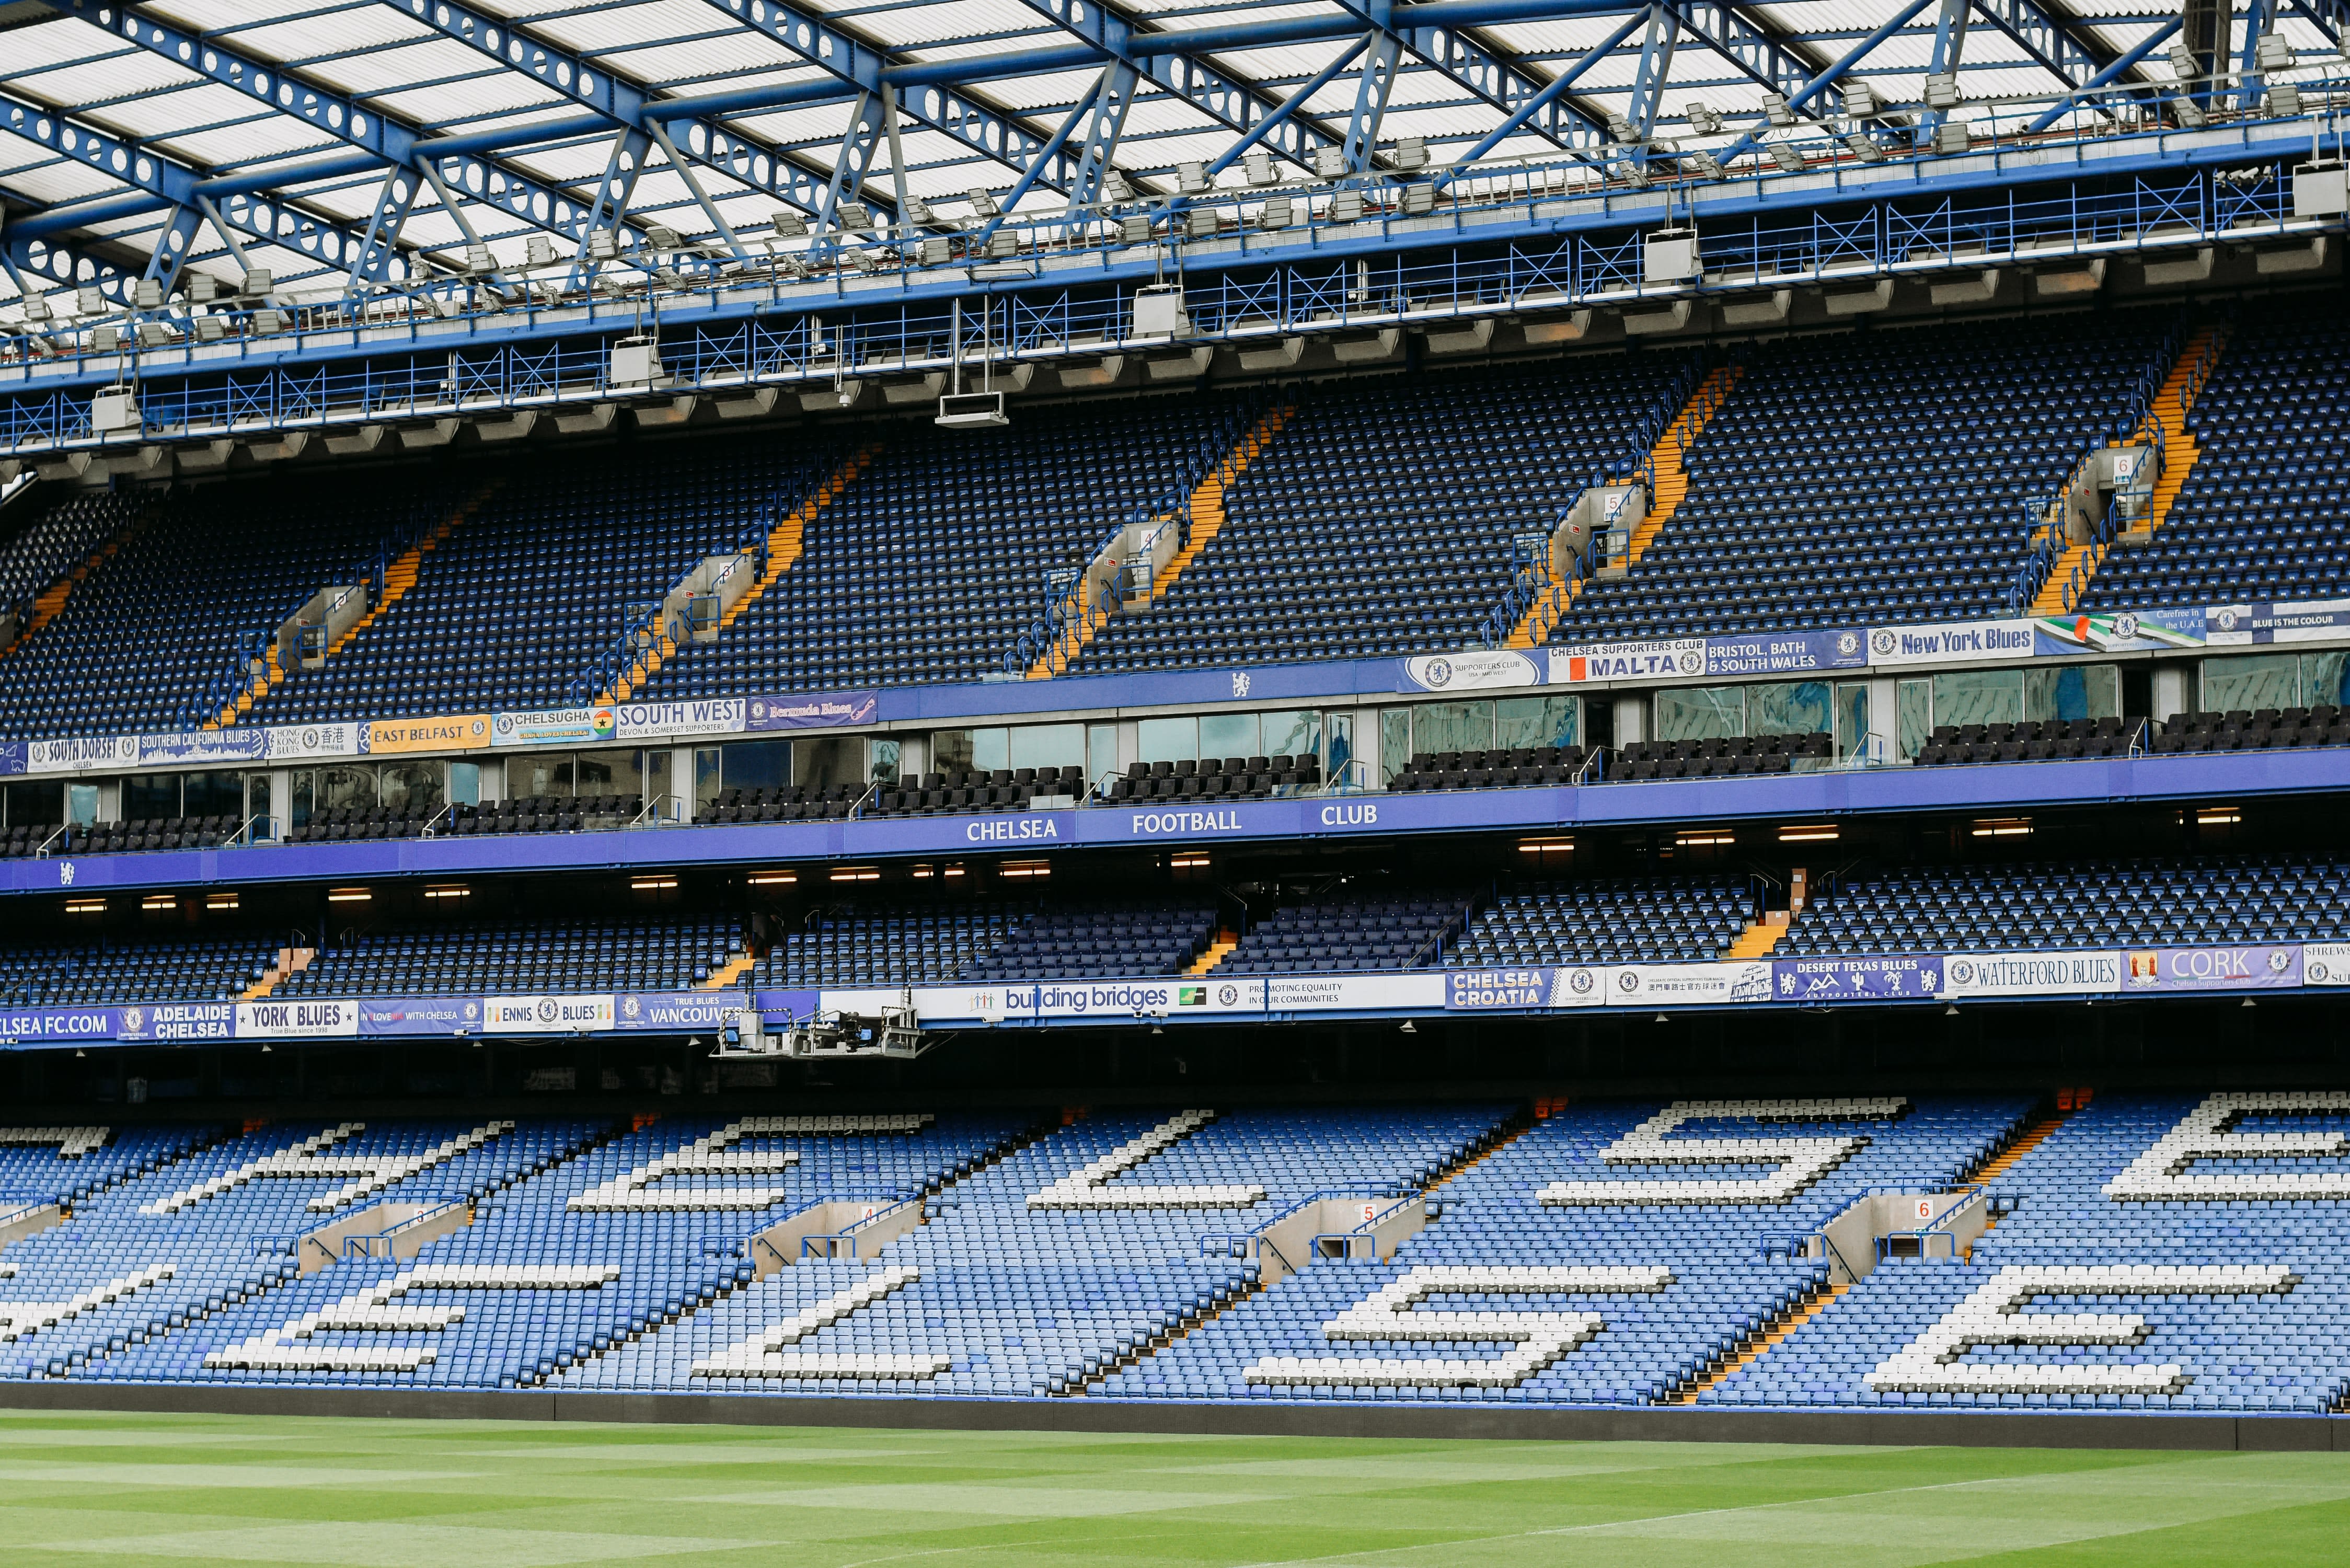 Chelsea FC Stamford Bridge seating